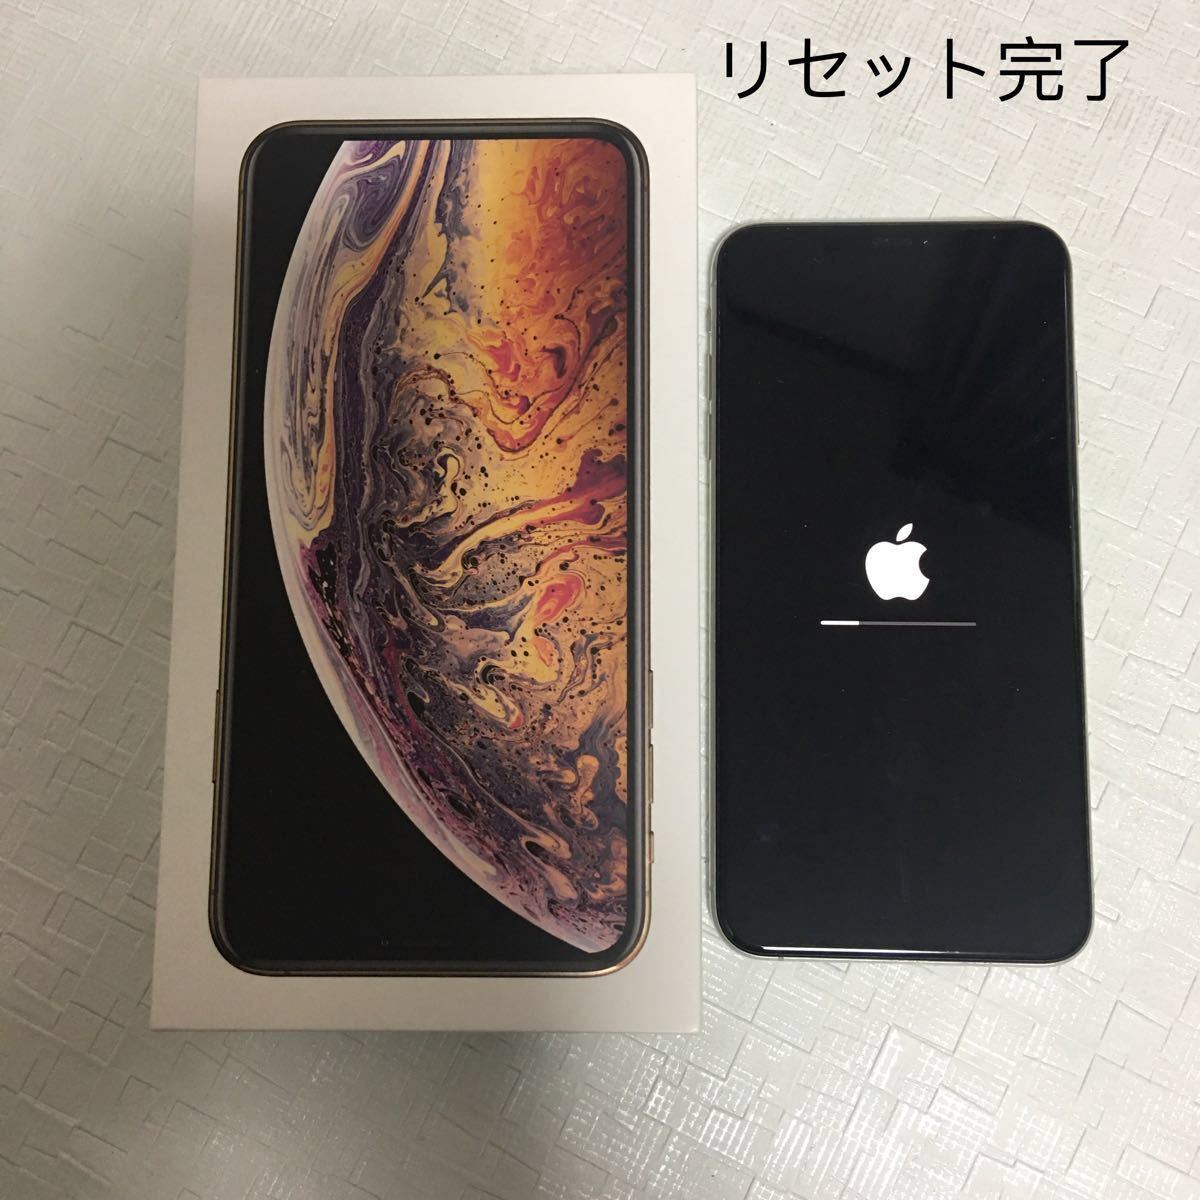 iPhone Xs Gold 256 GB SIMフリー 美品 - rehda.com